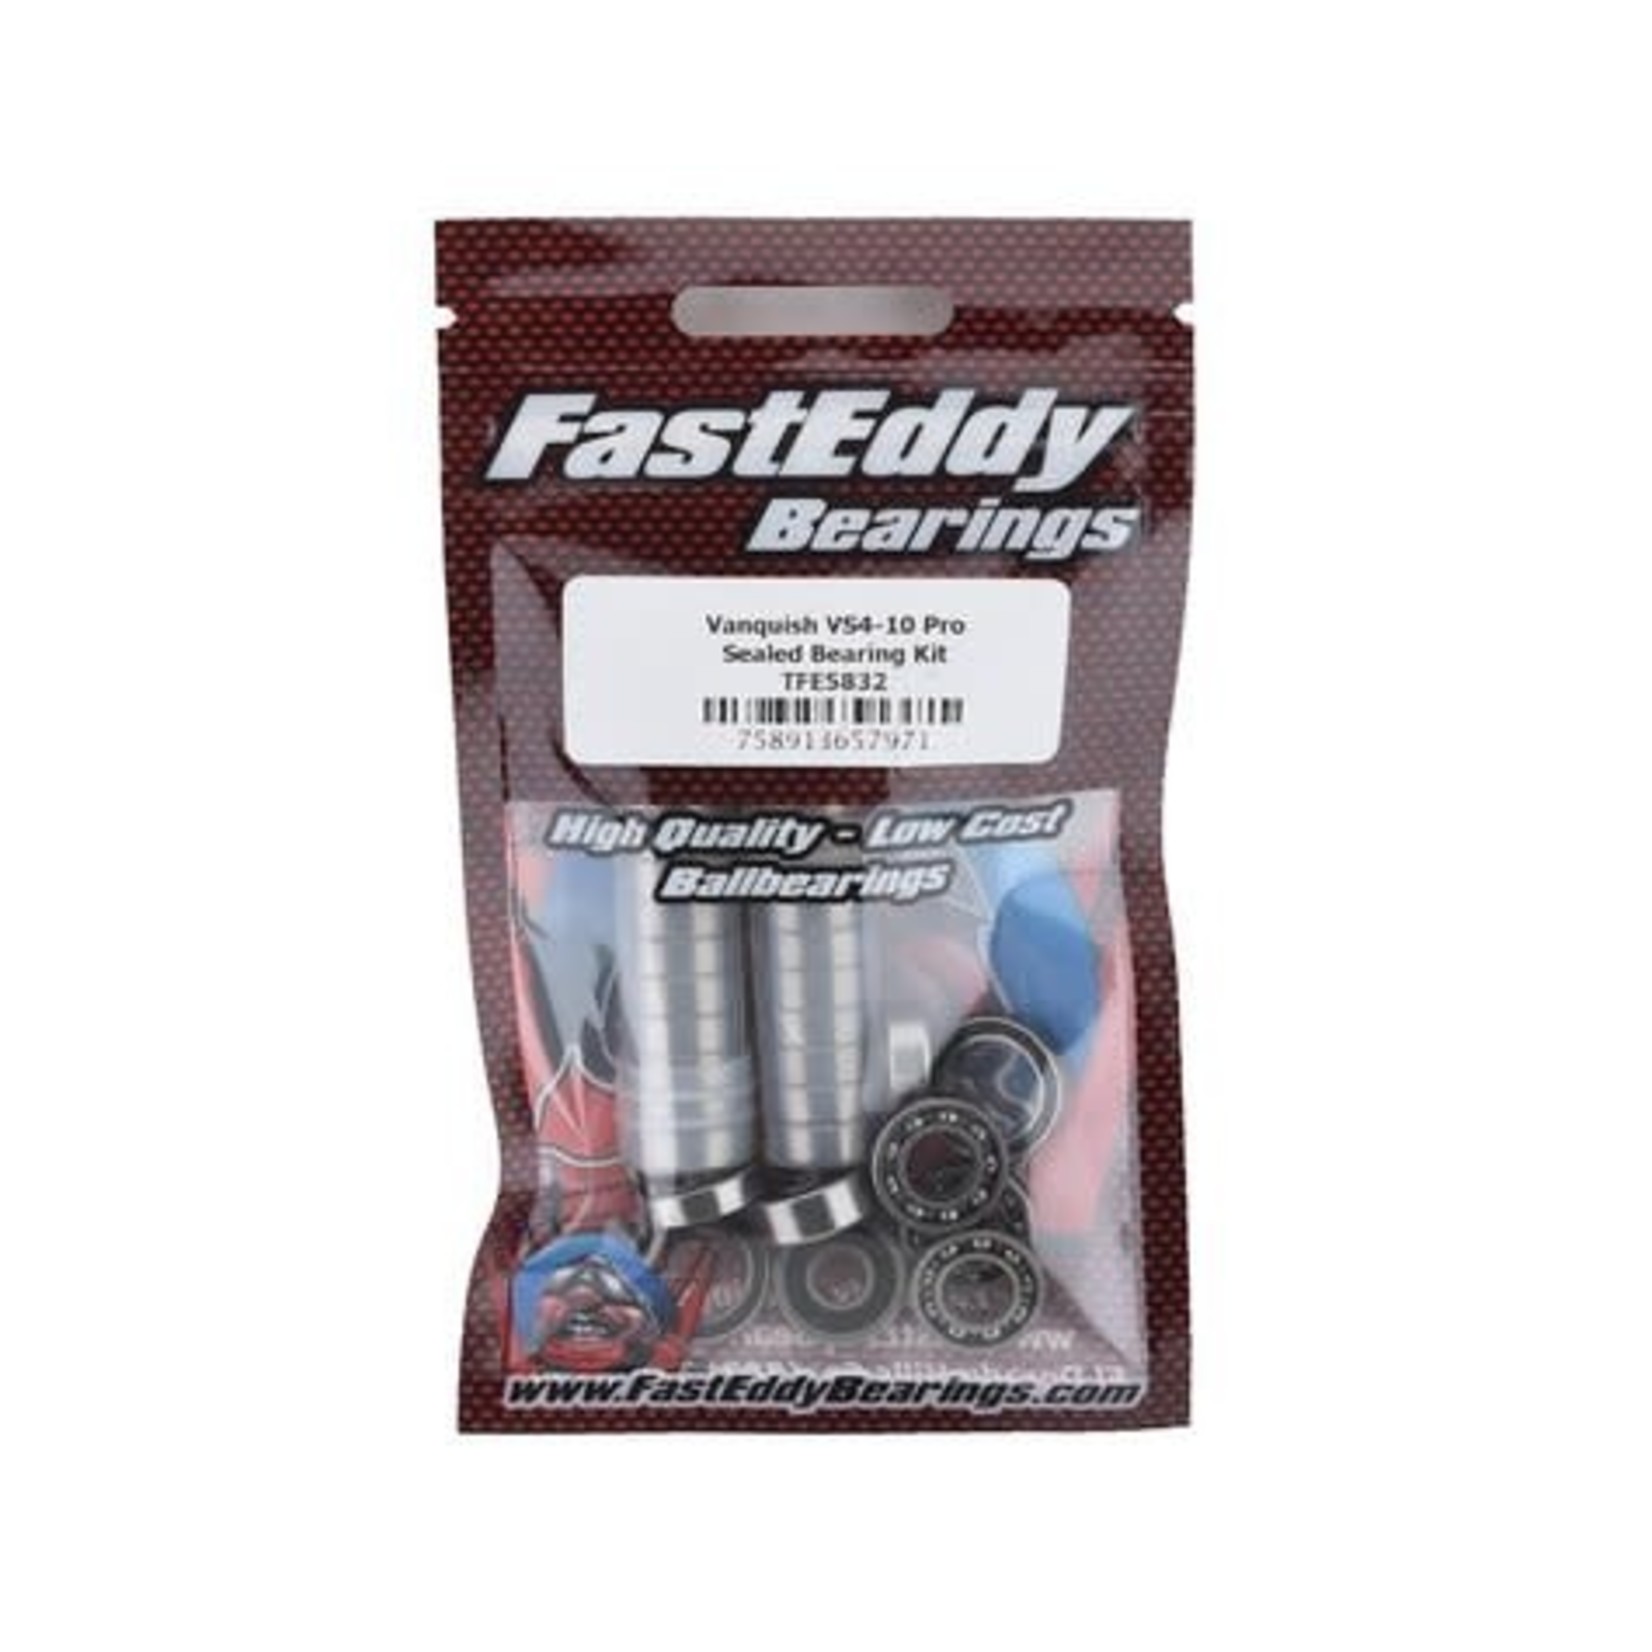 FastEddy FastEddy Vanquish VS4-10 Pro Sealed Bearing Kit #TFE5832